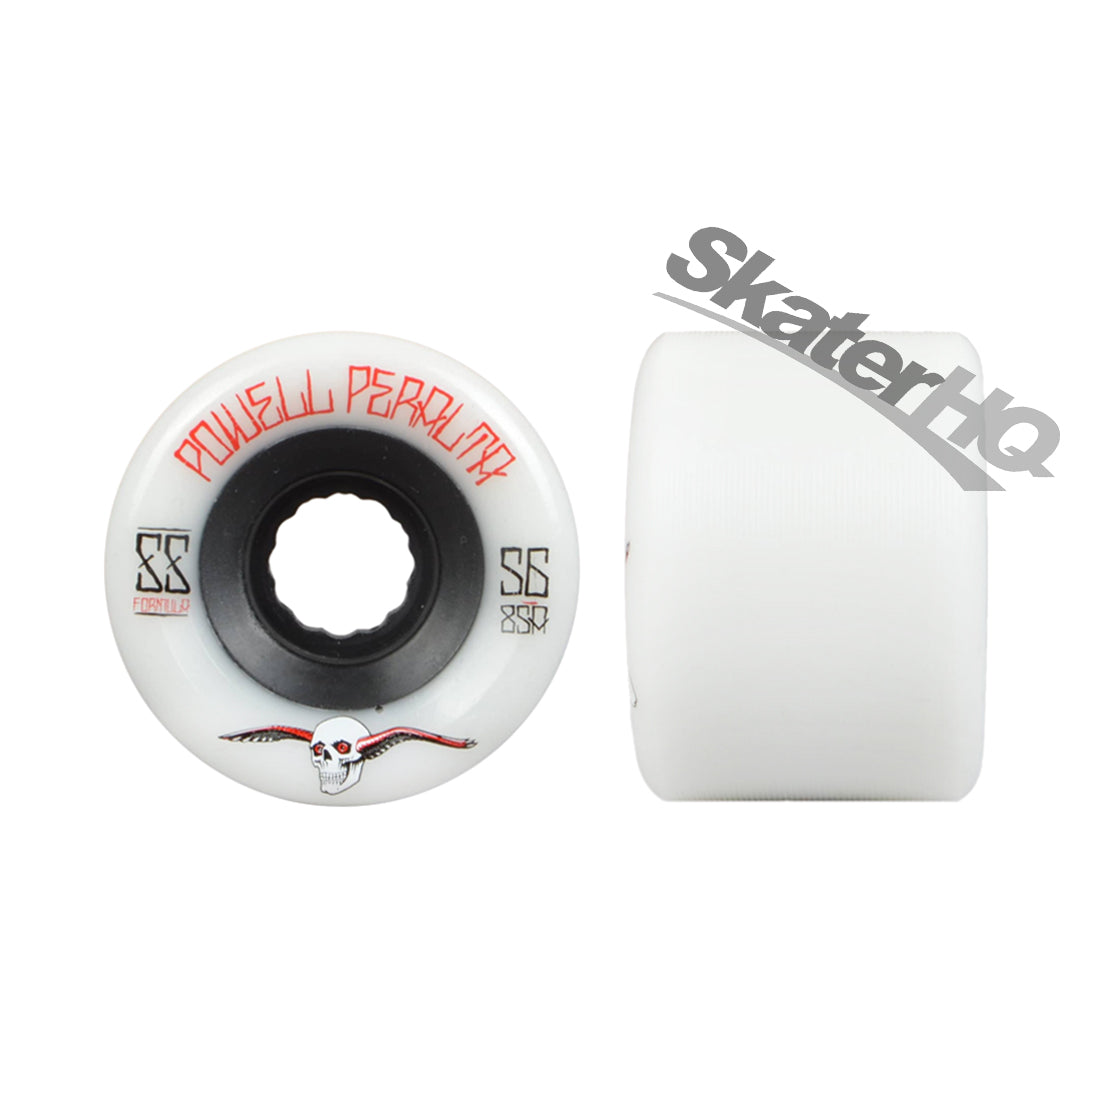 Powell Peralta SSF G-Slides 56mm 85a - White Skateboard Wheels